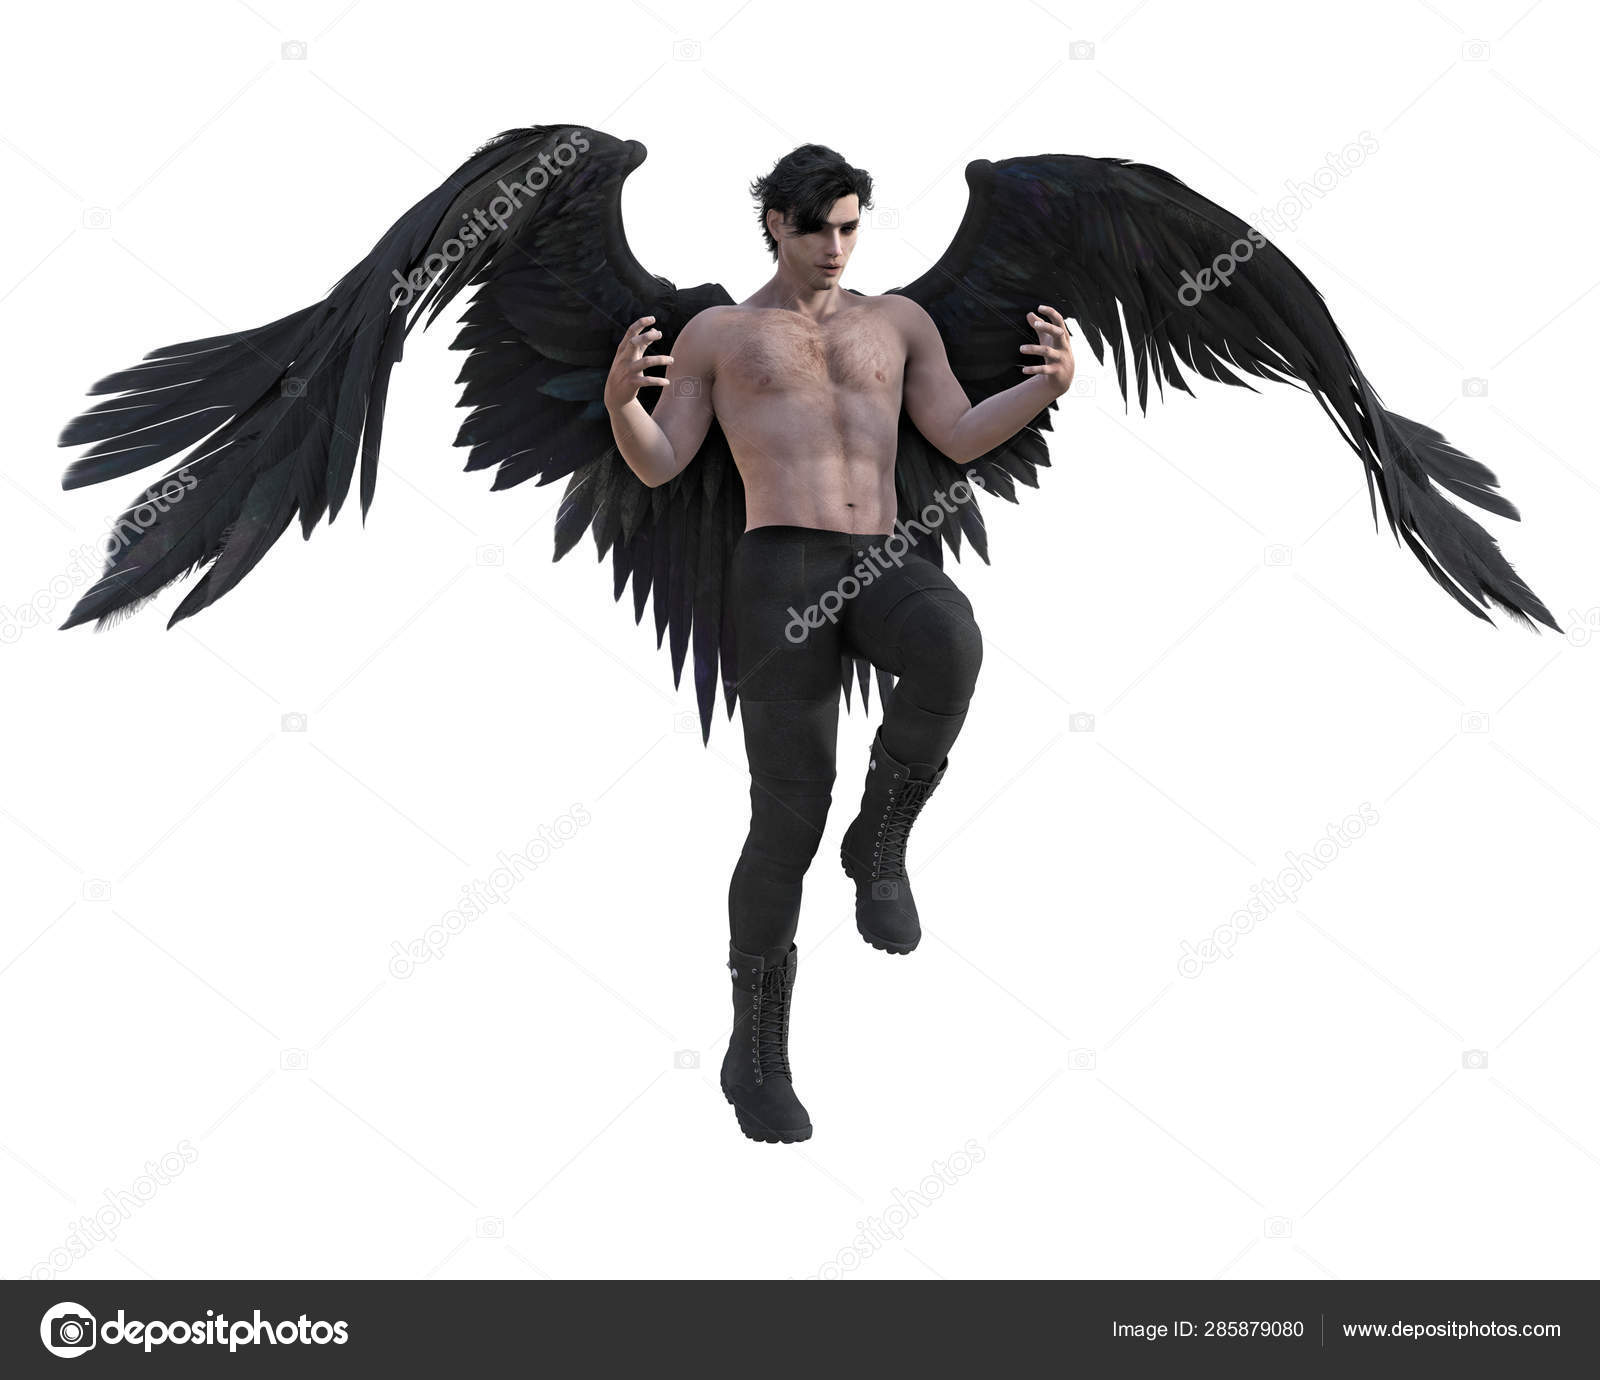 Enfim, o anjo de asas negras surge/ Finally, the black-winged